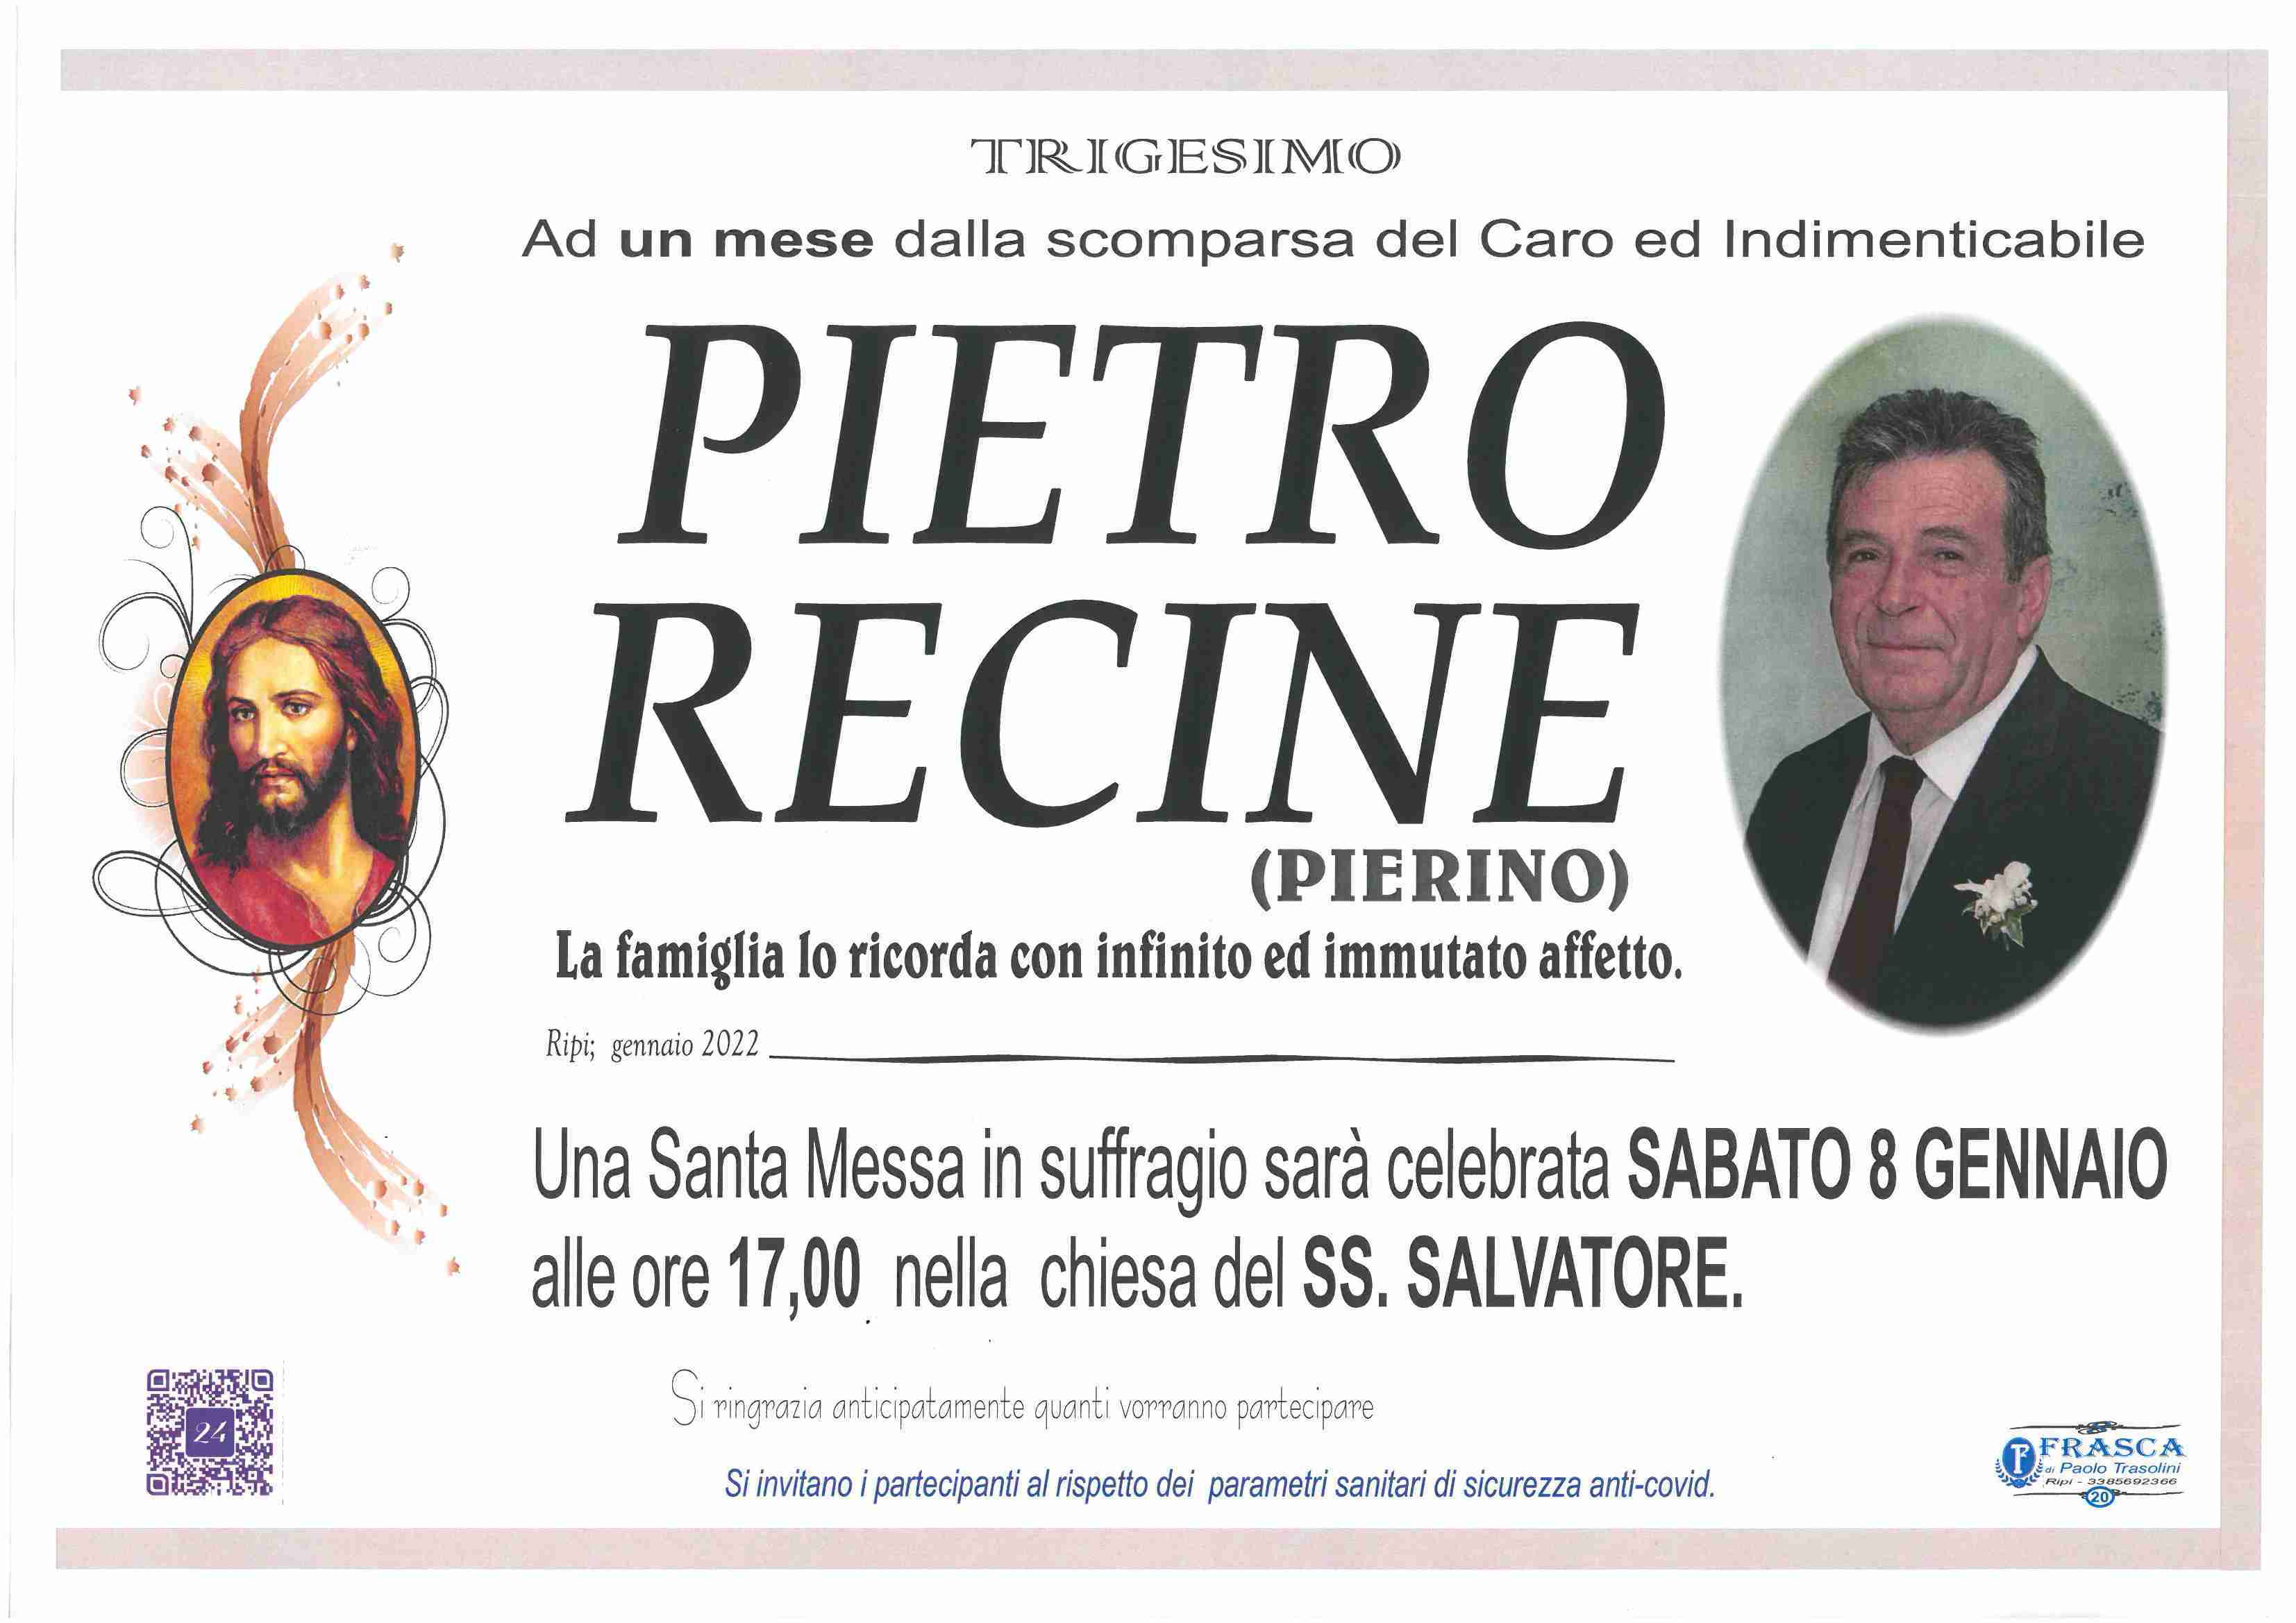 Pietro Recine